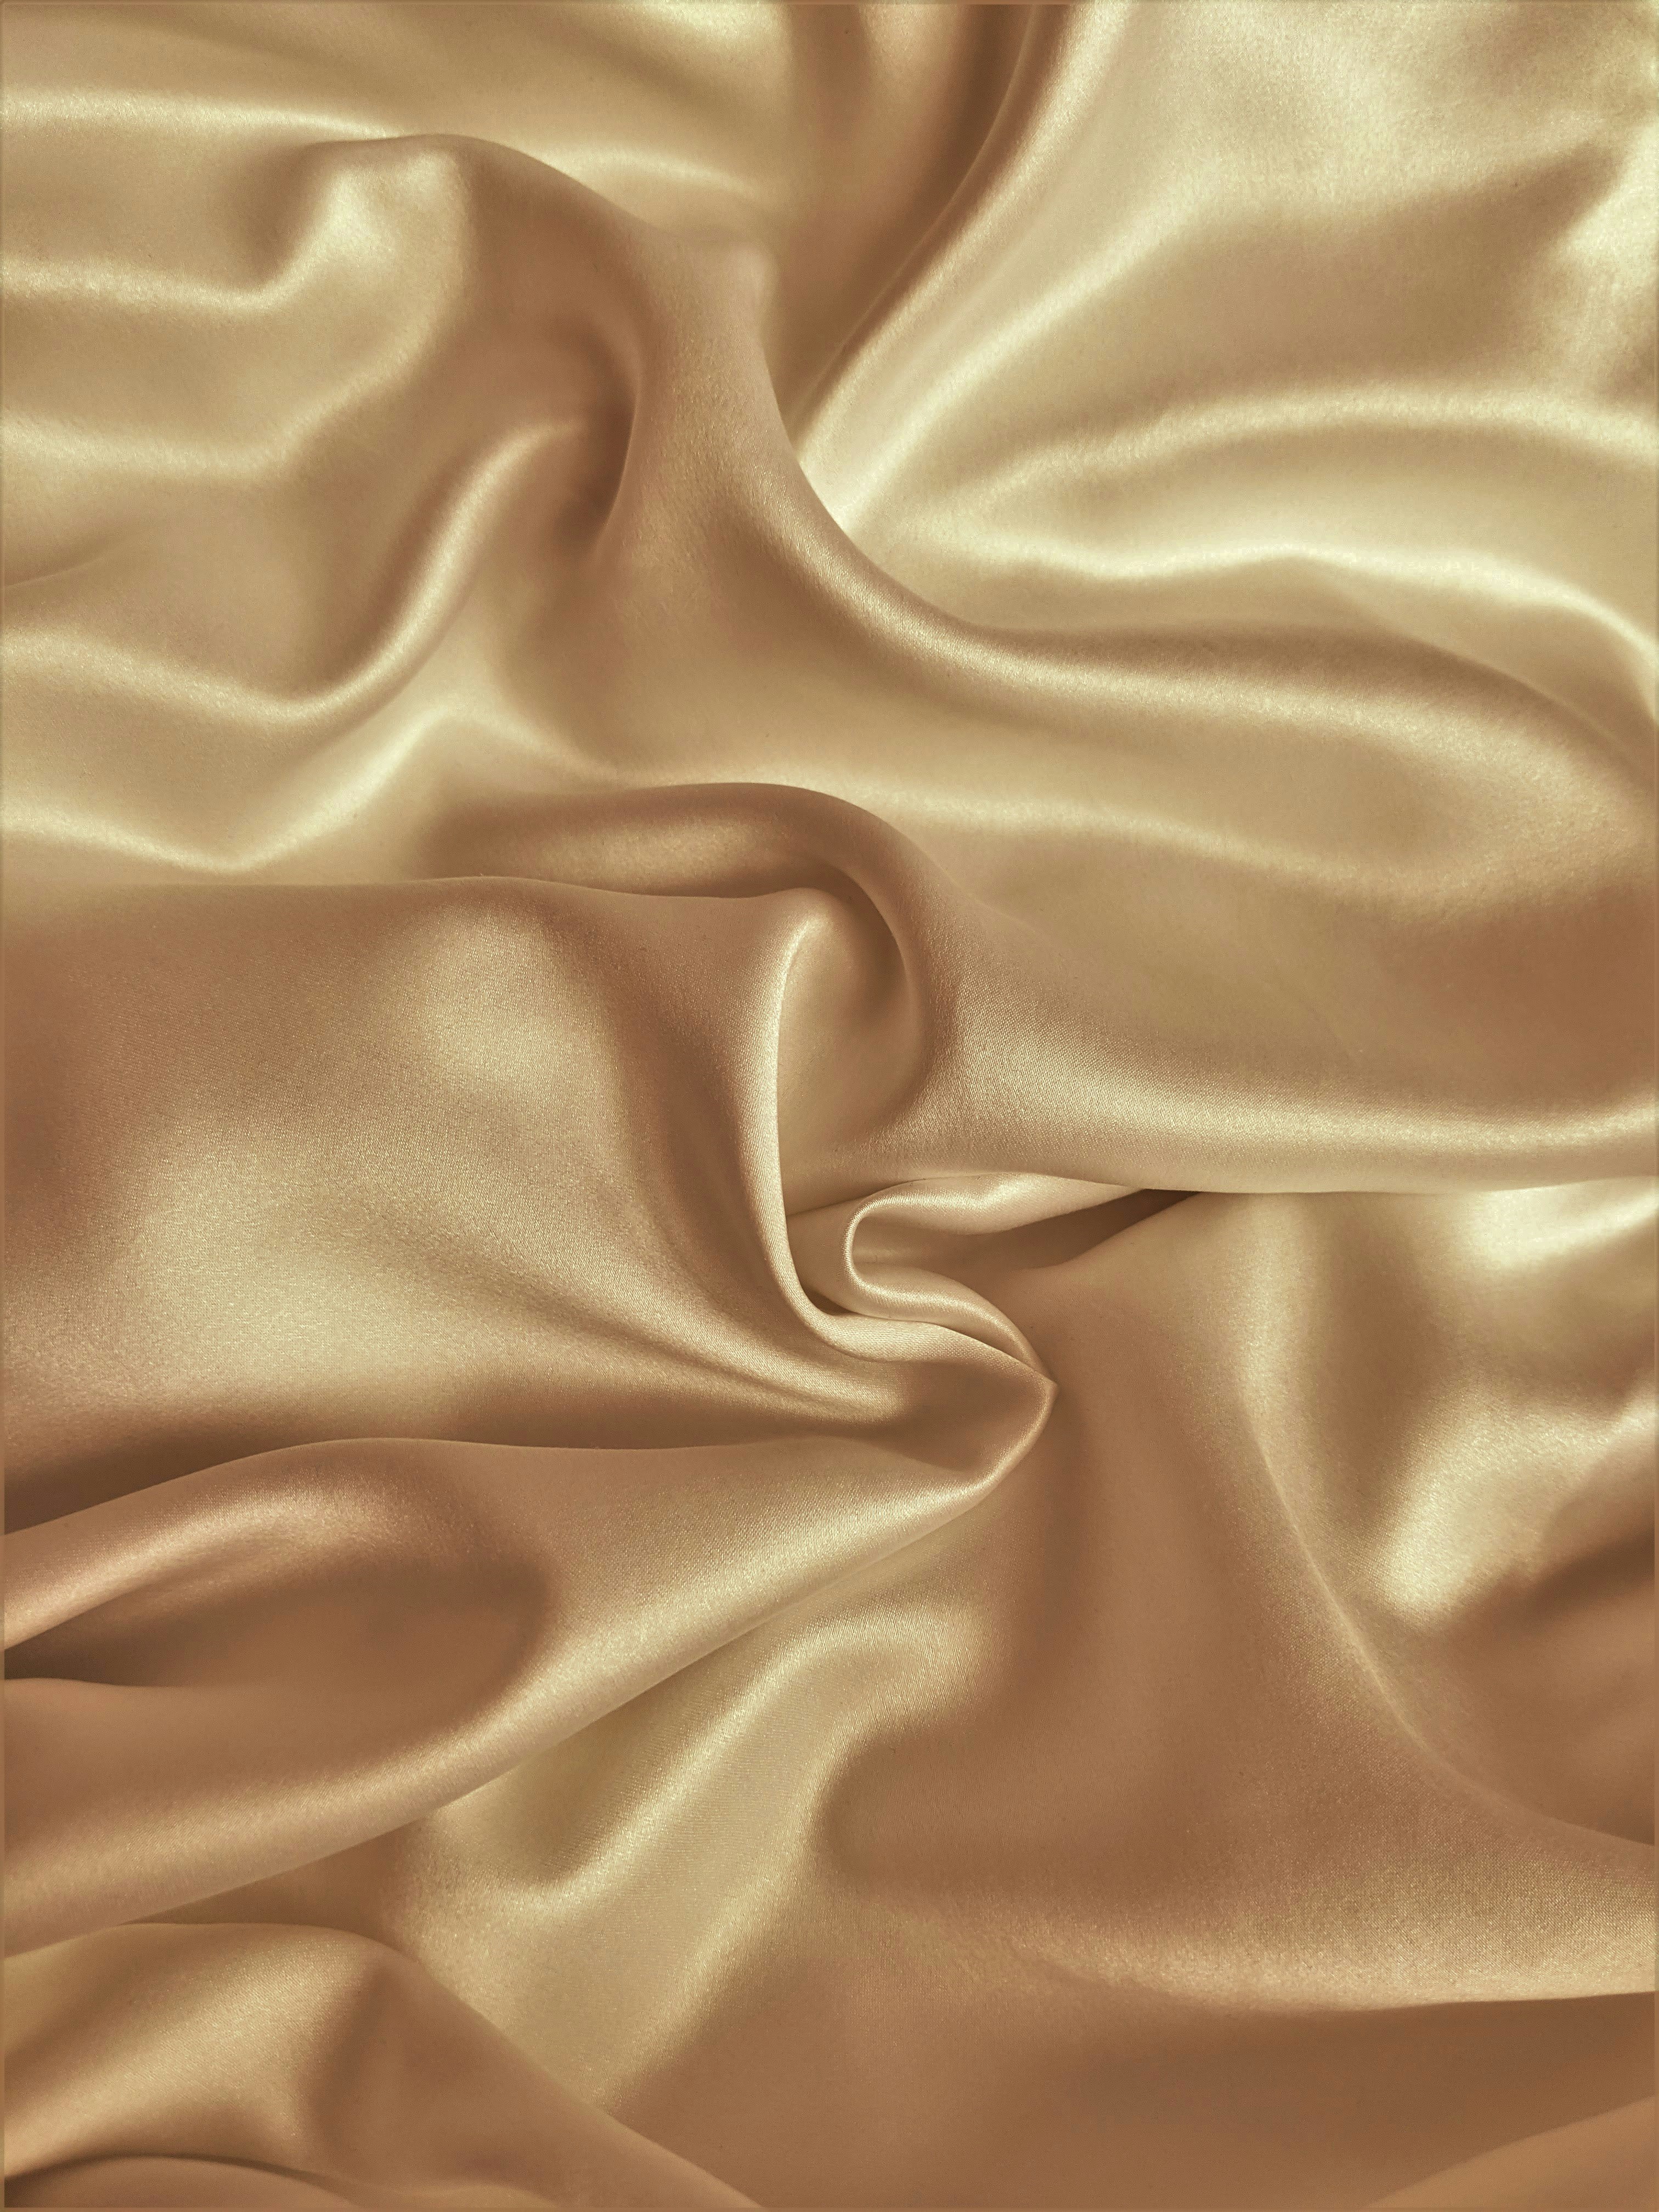 Gold silk in natural light